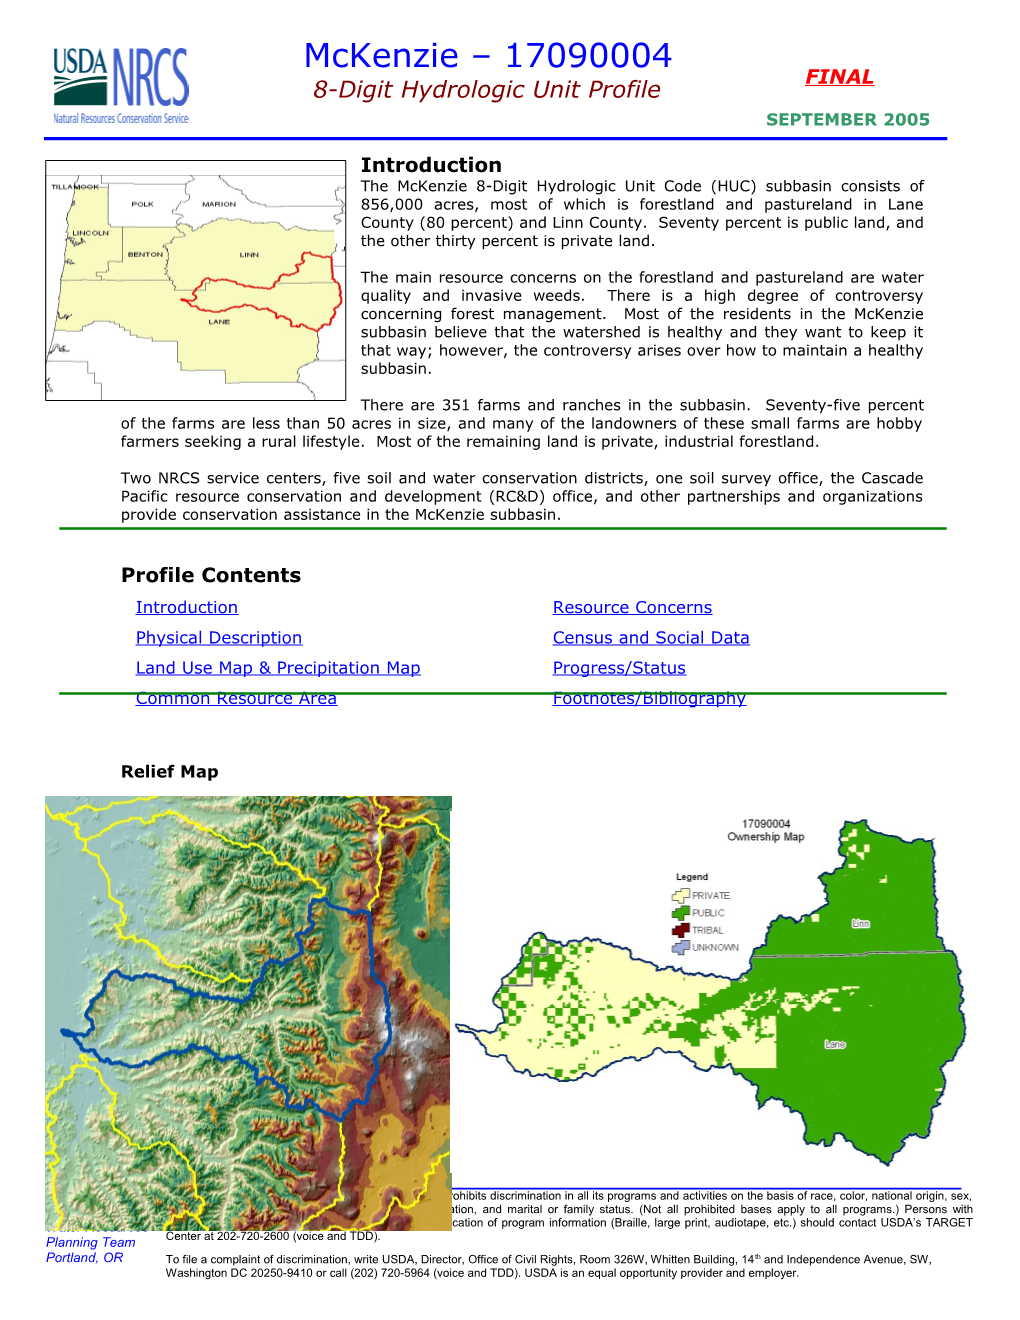 The Mckenzie 8-Digit Hydrologic Unit Code (HUC) Subbasin Consists of 856,000 Acres, Most